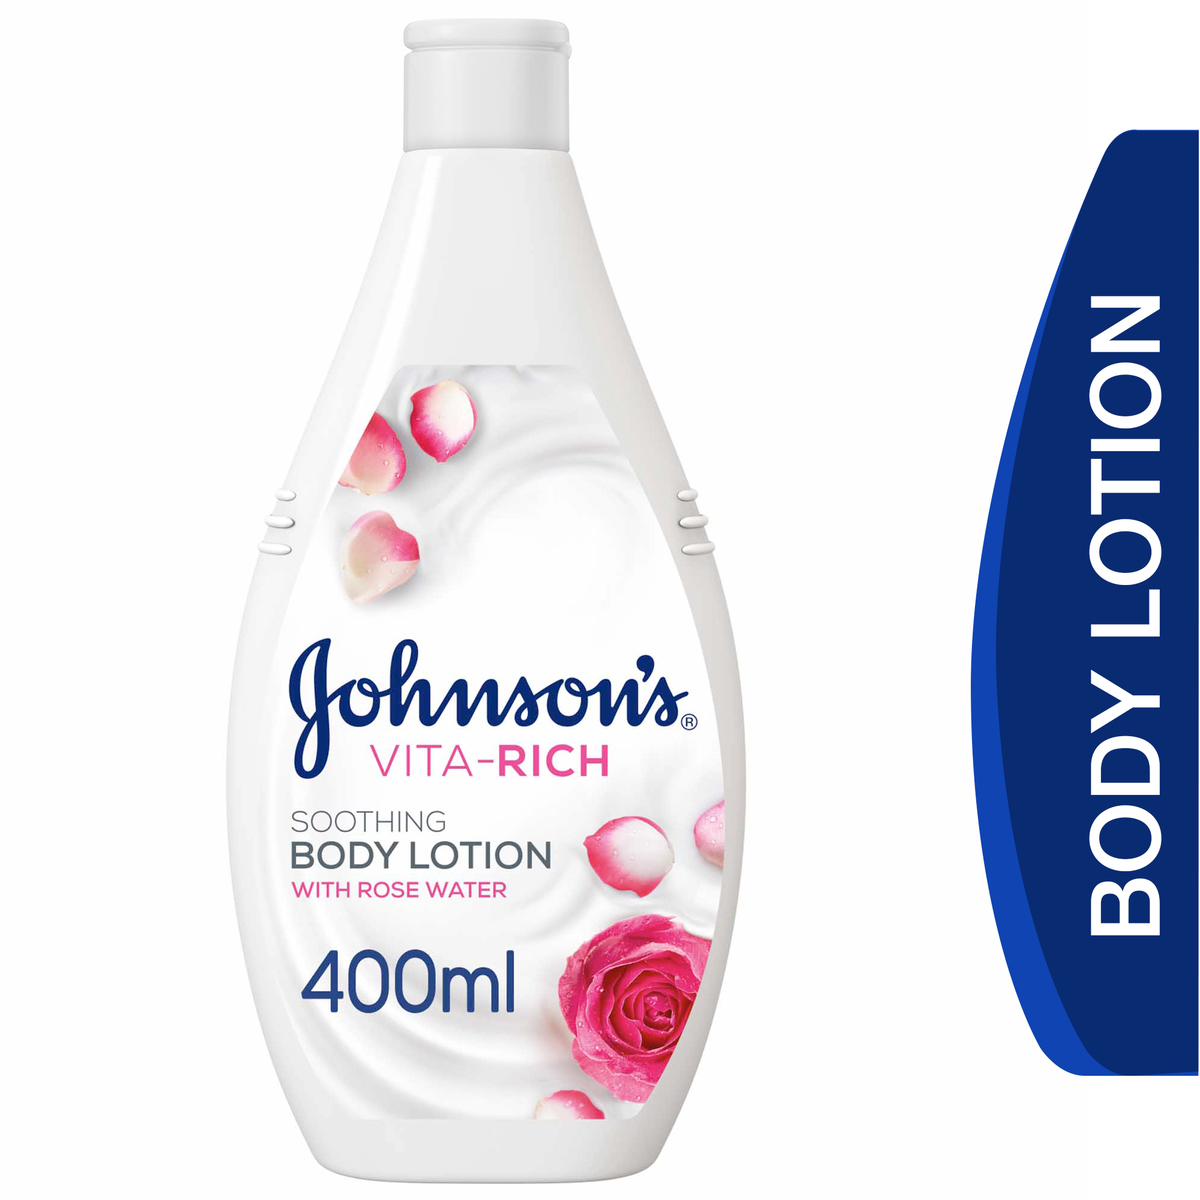 Johnson's Body Lotion Vita-Rich Soothing 400 ml